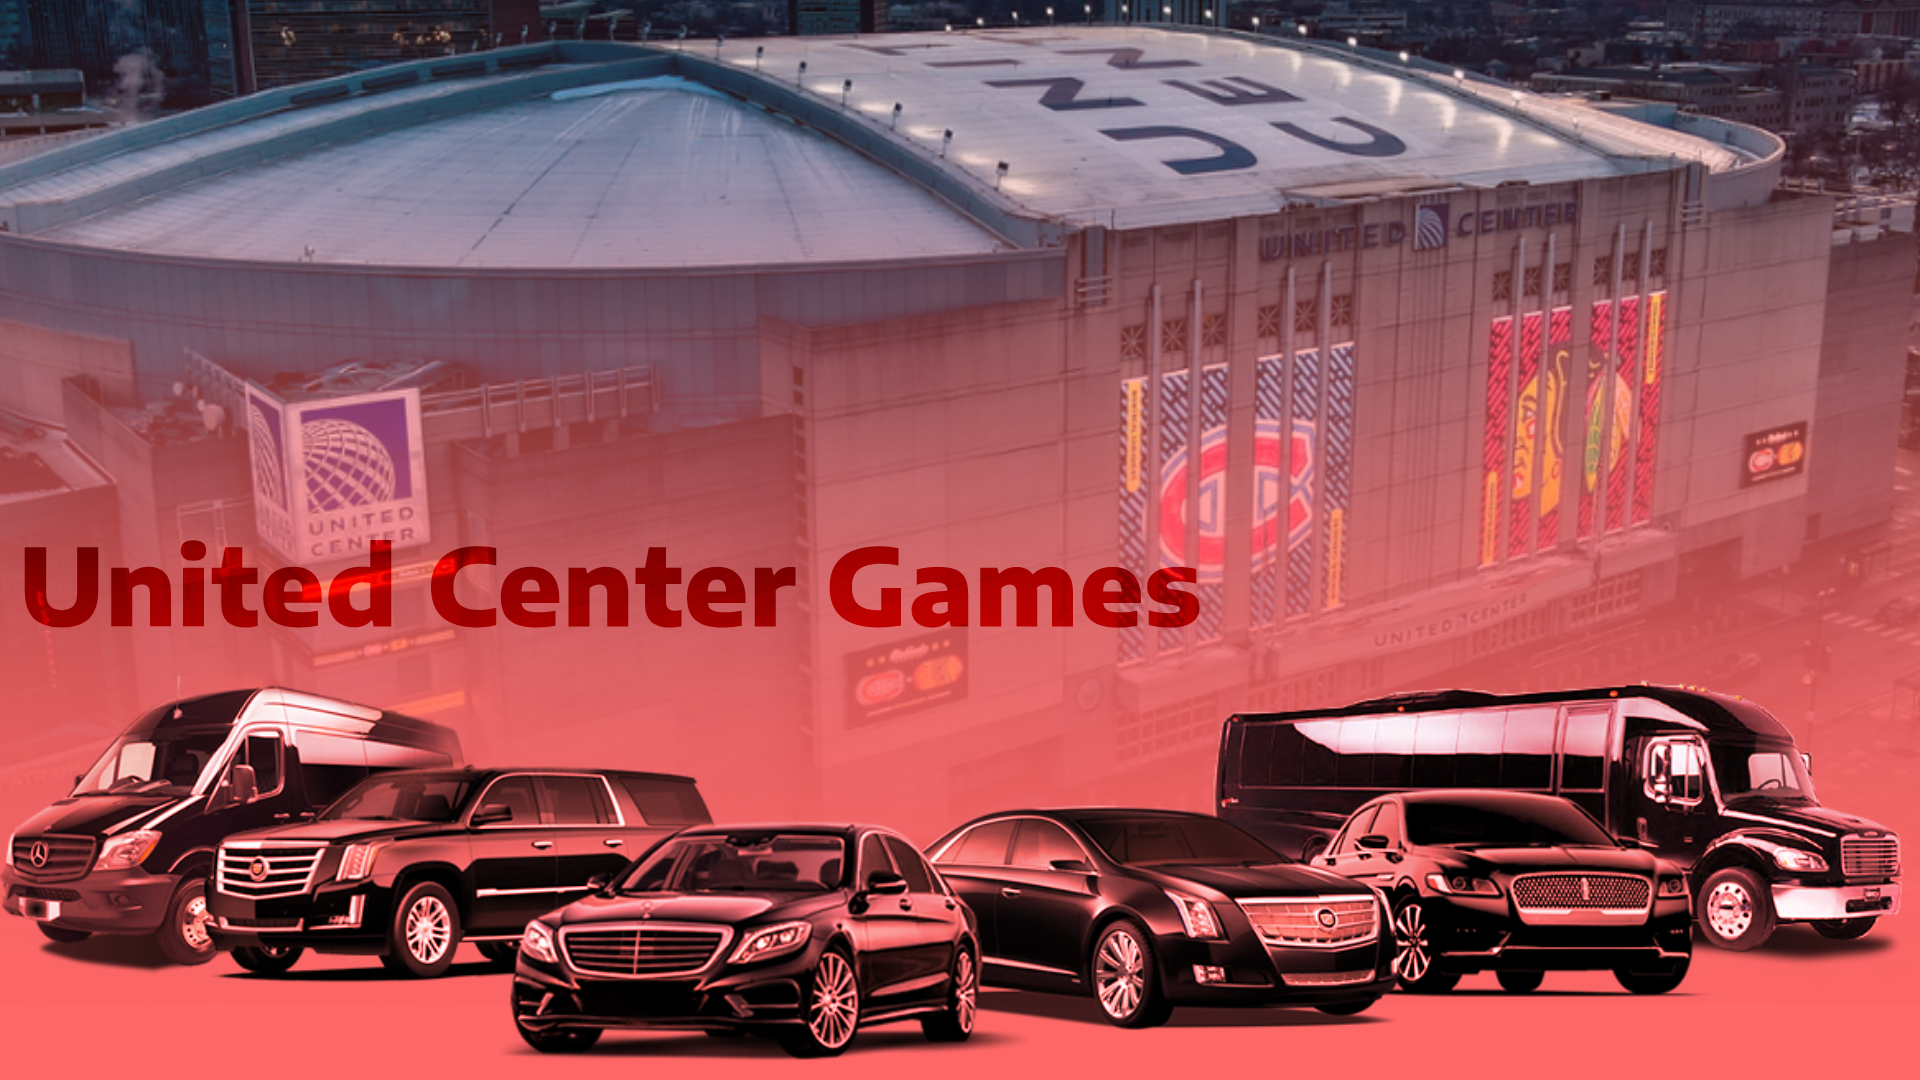 United Center Parking - Chicago Bulls & Blackhawks Game Parking